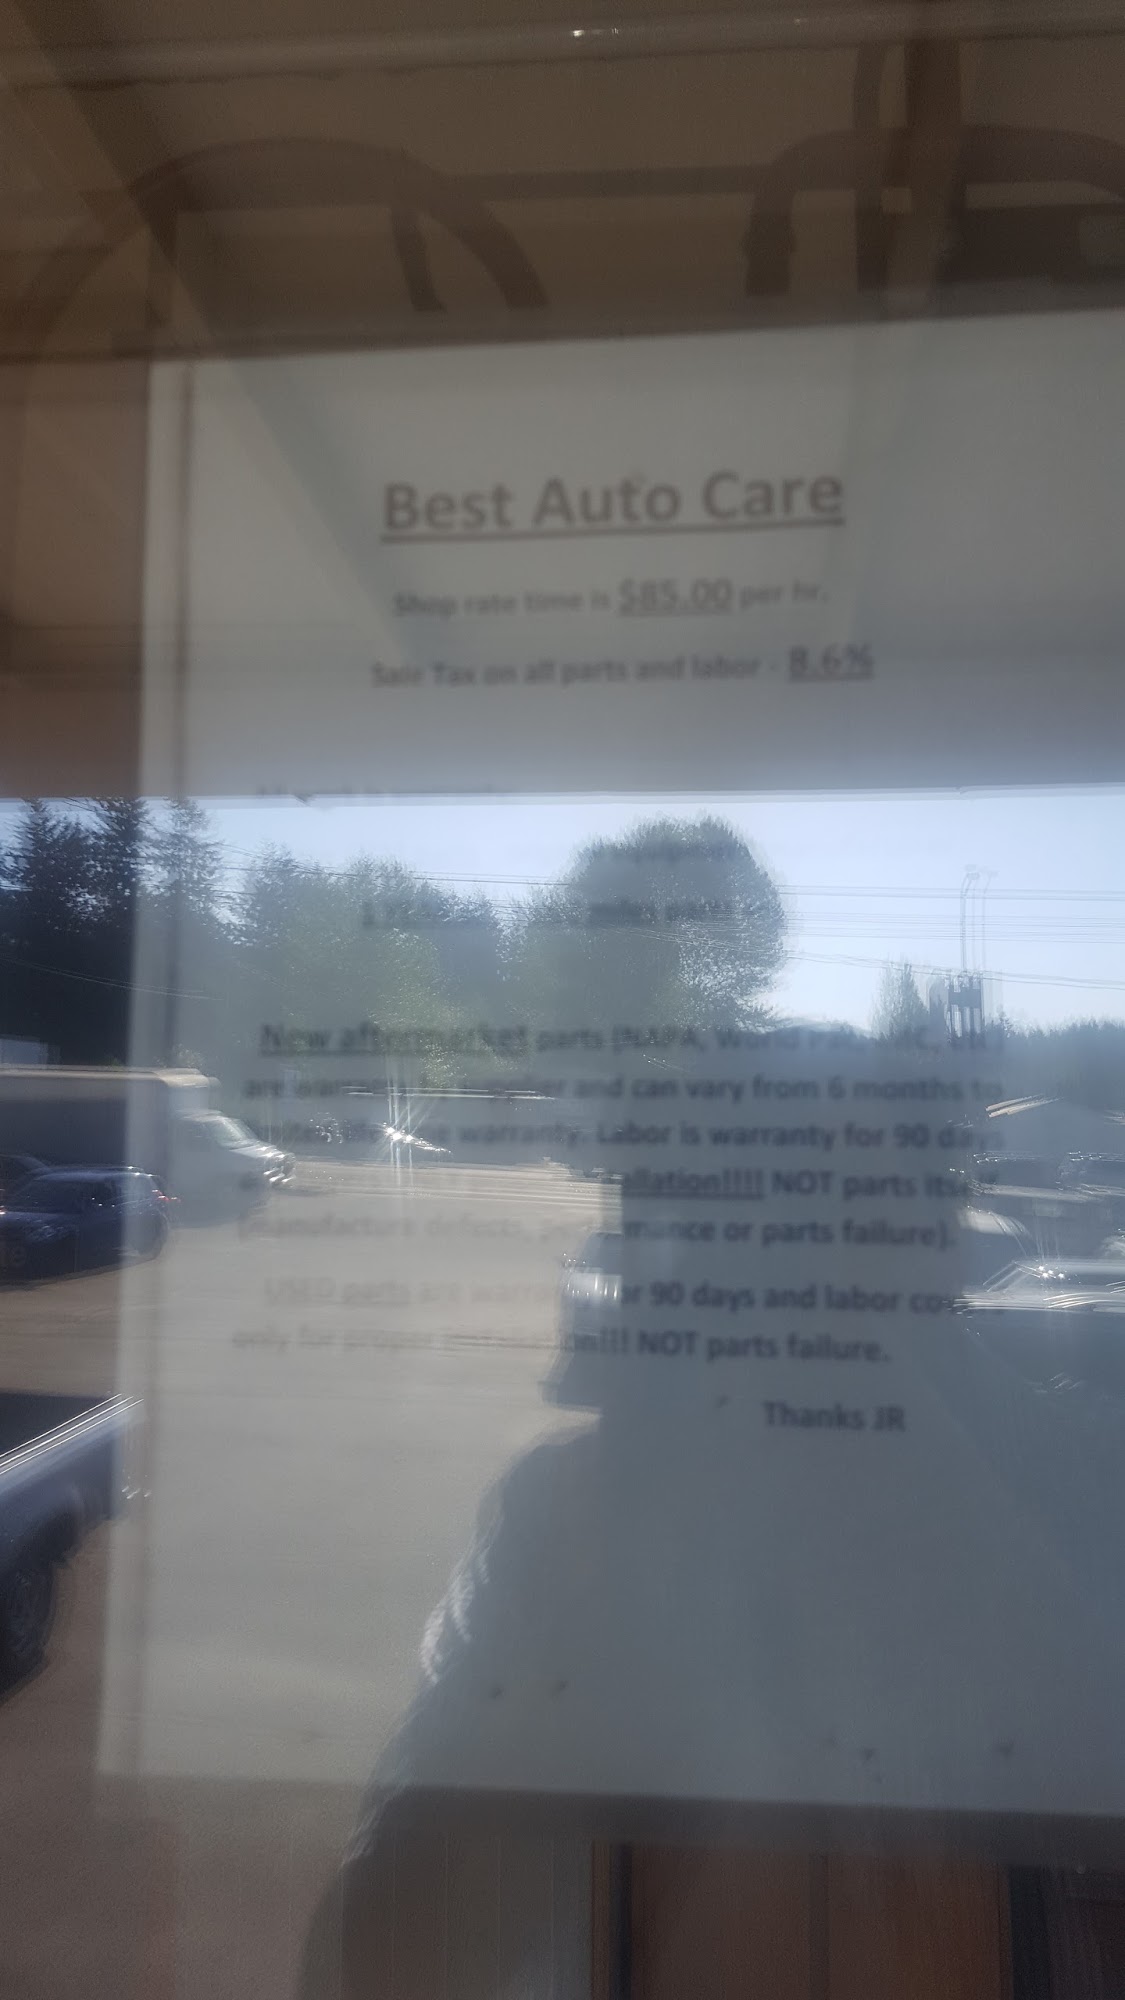 Best Auto Care